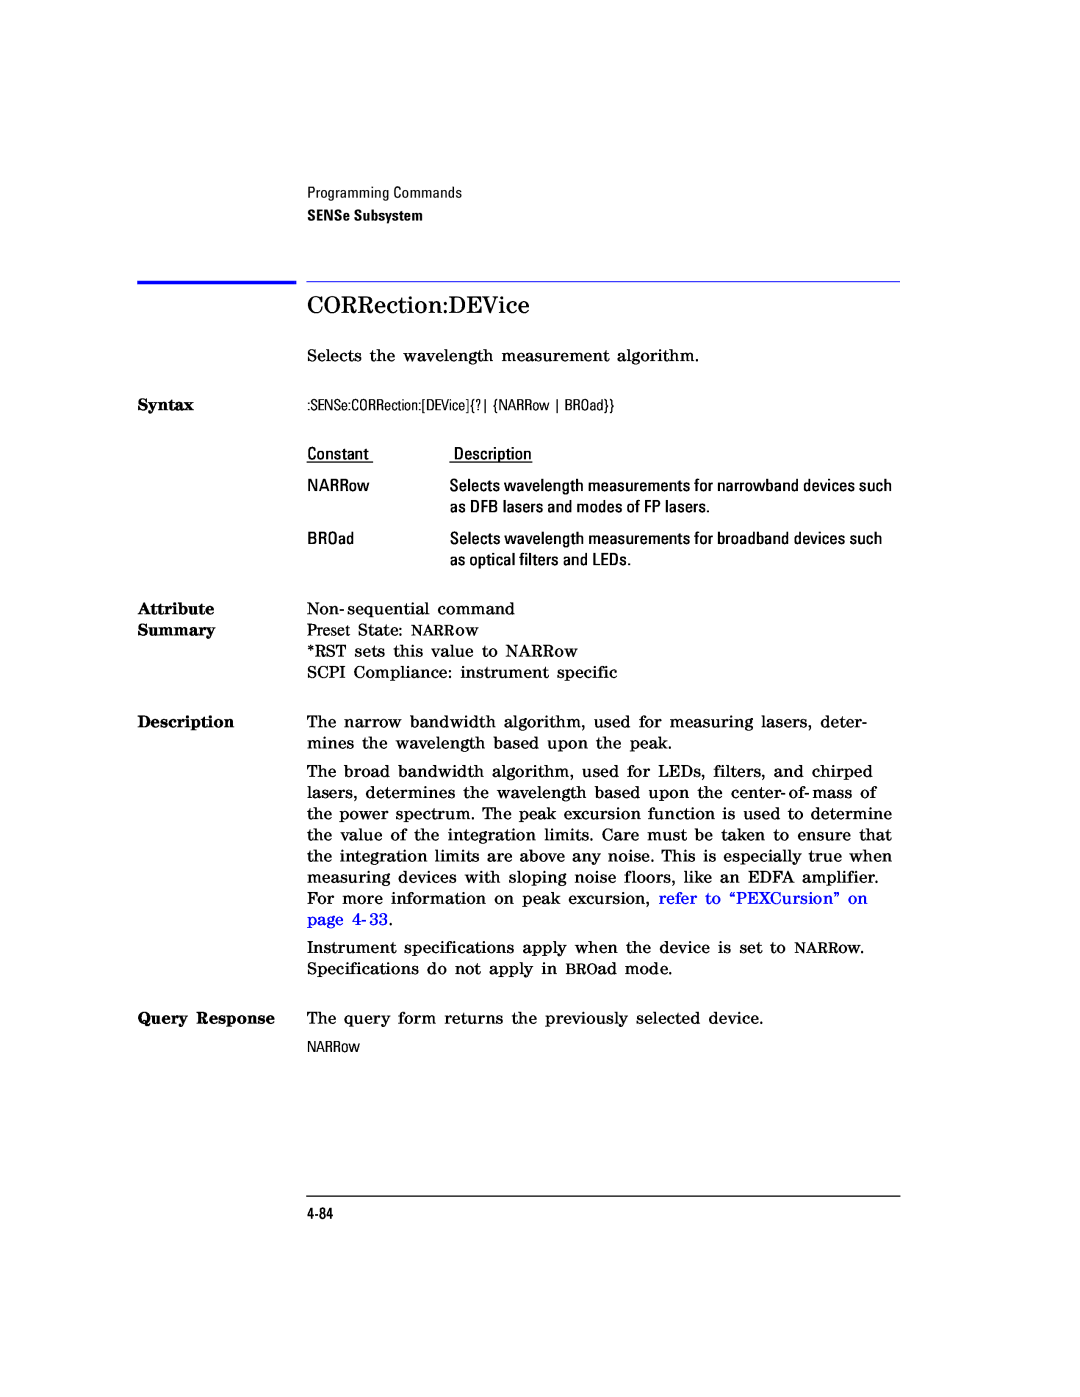 Agilent Technologies Agilent 86120C manual CORRectionDEVice, page 4 